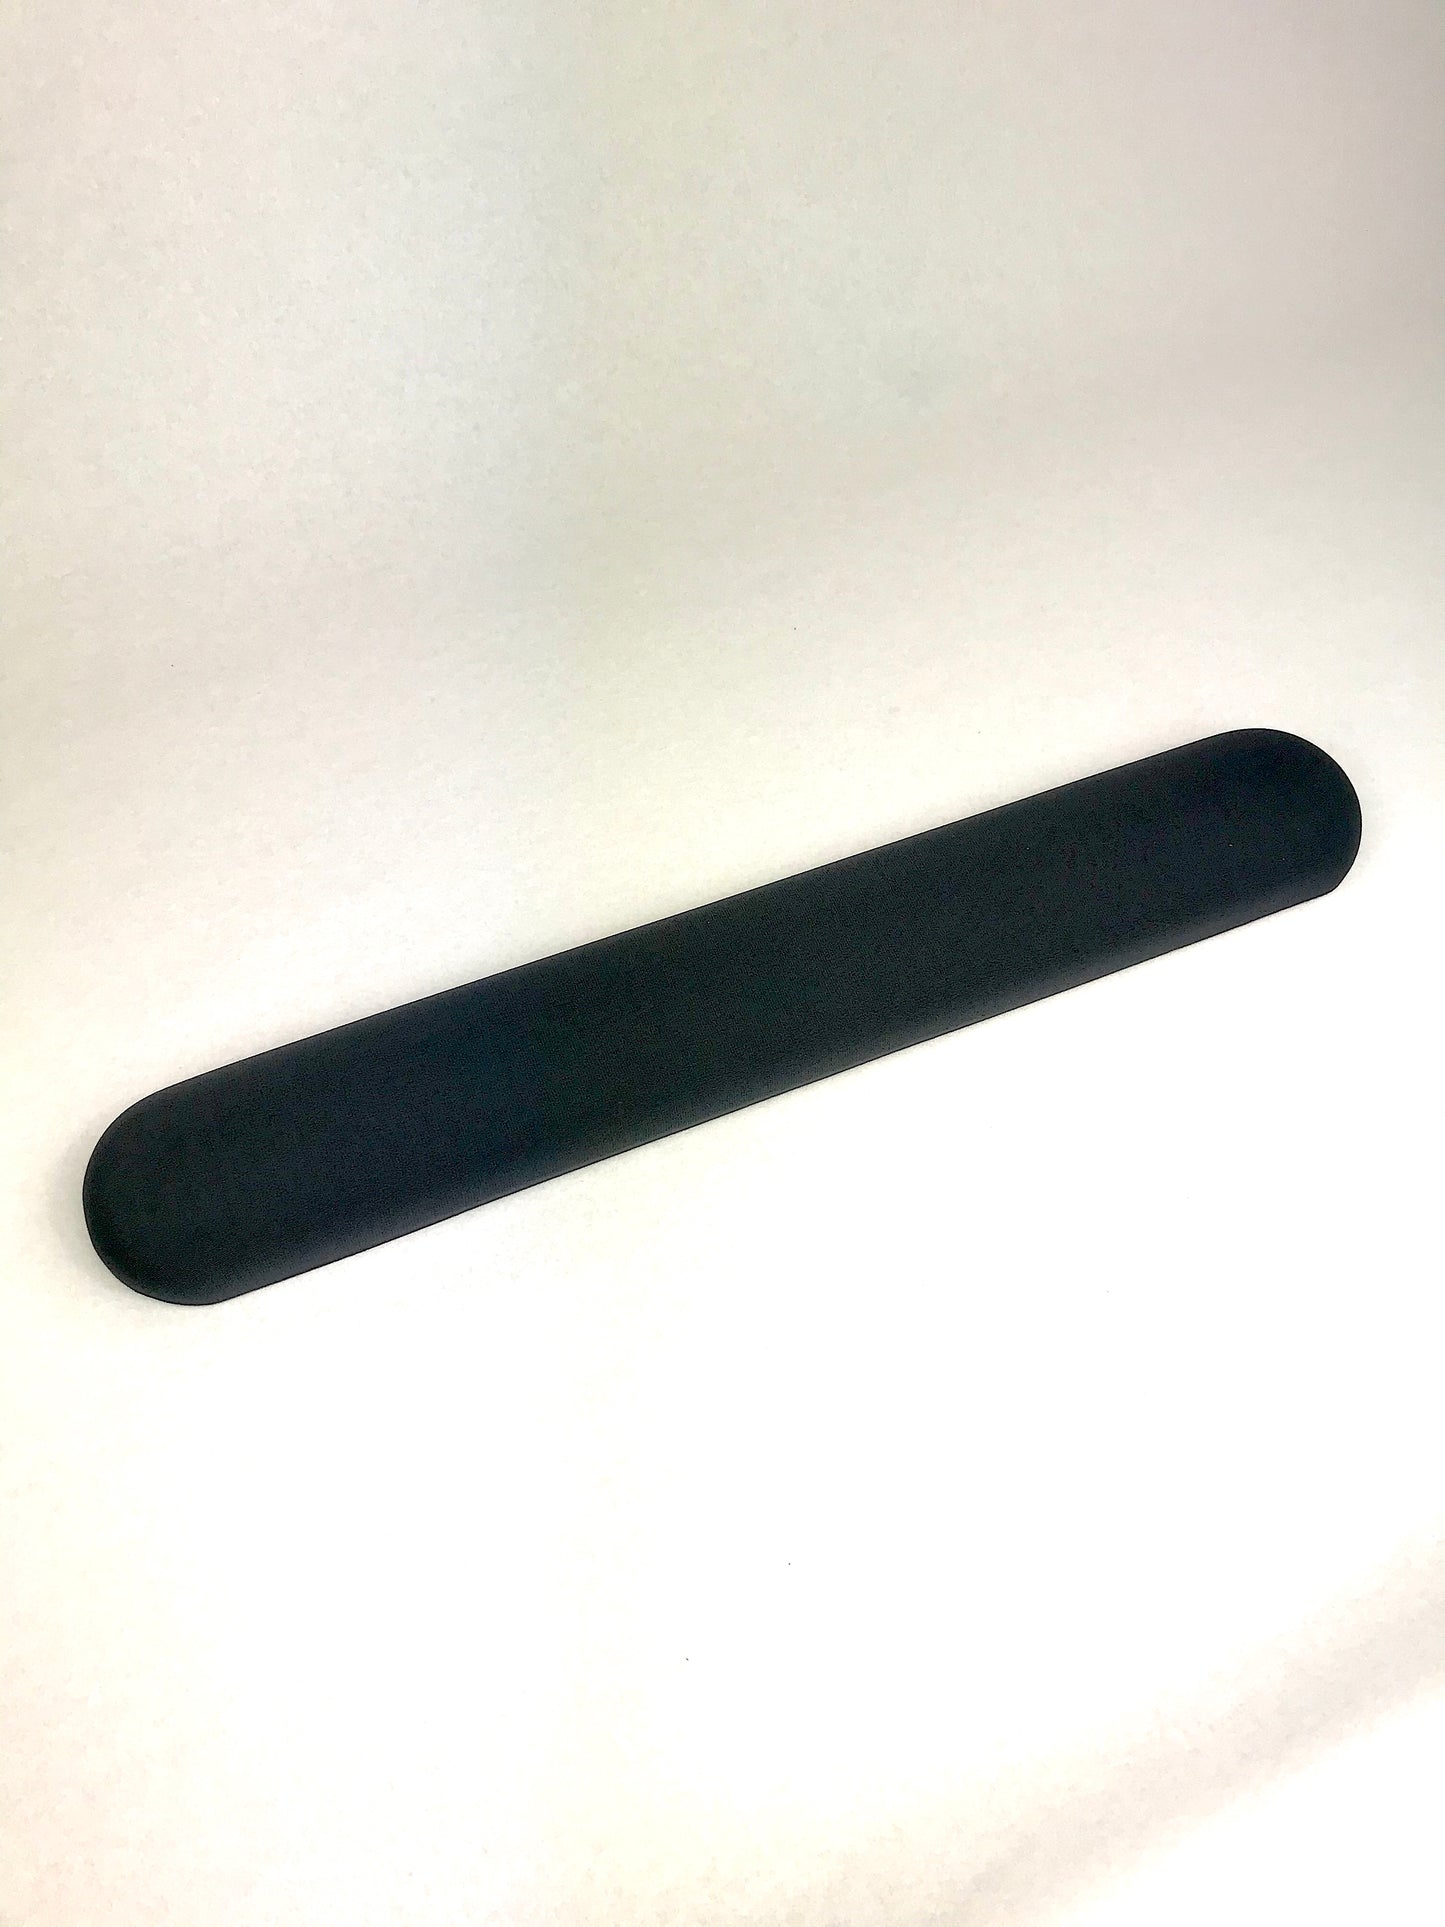 KEYBOARD ERGO GEL - Wrist rest made of gel for ergonomic writing with a keyboard